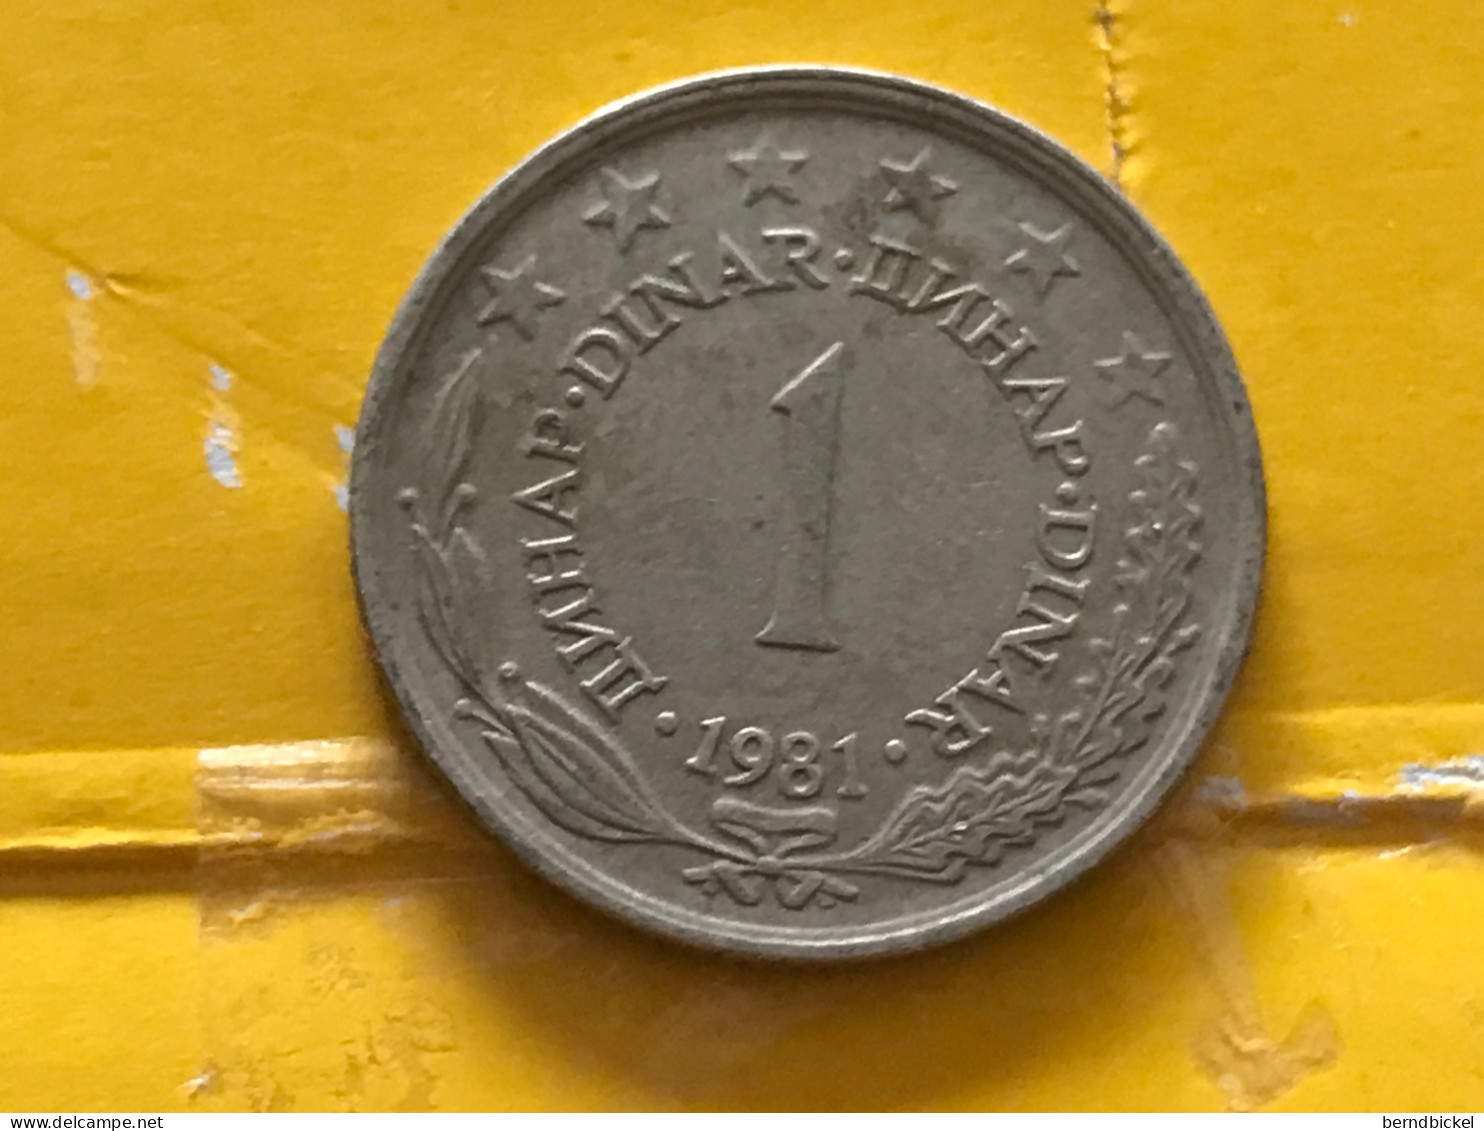 Münze Münzen Umlaufmünze Jugoslawien 1 Dinar 1981 - Yougoslavie